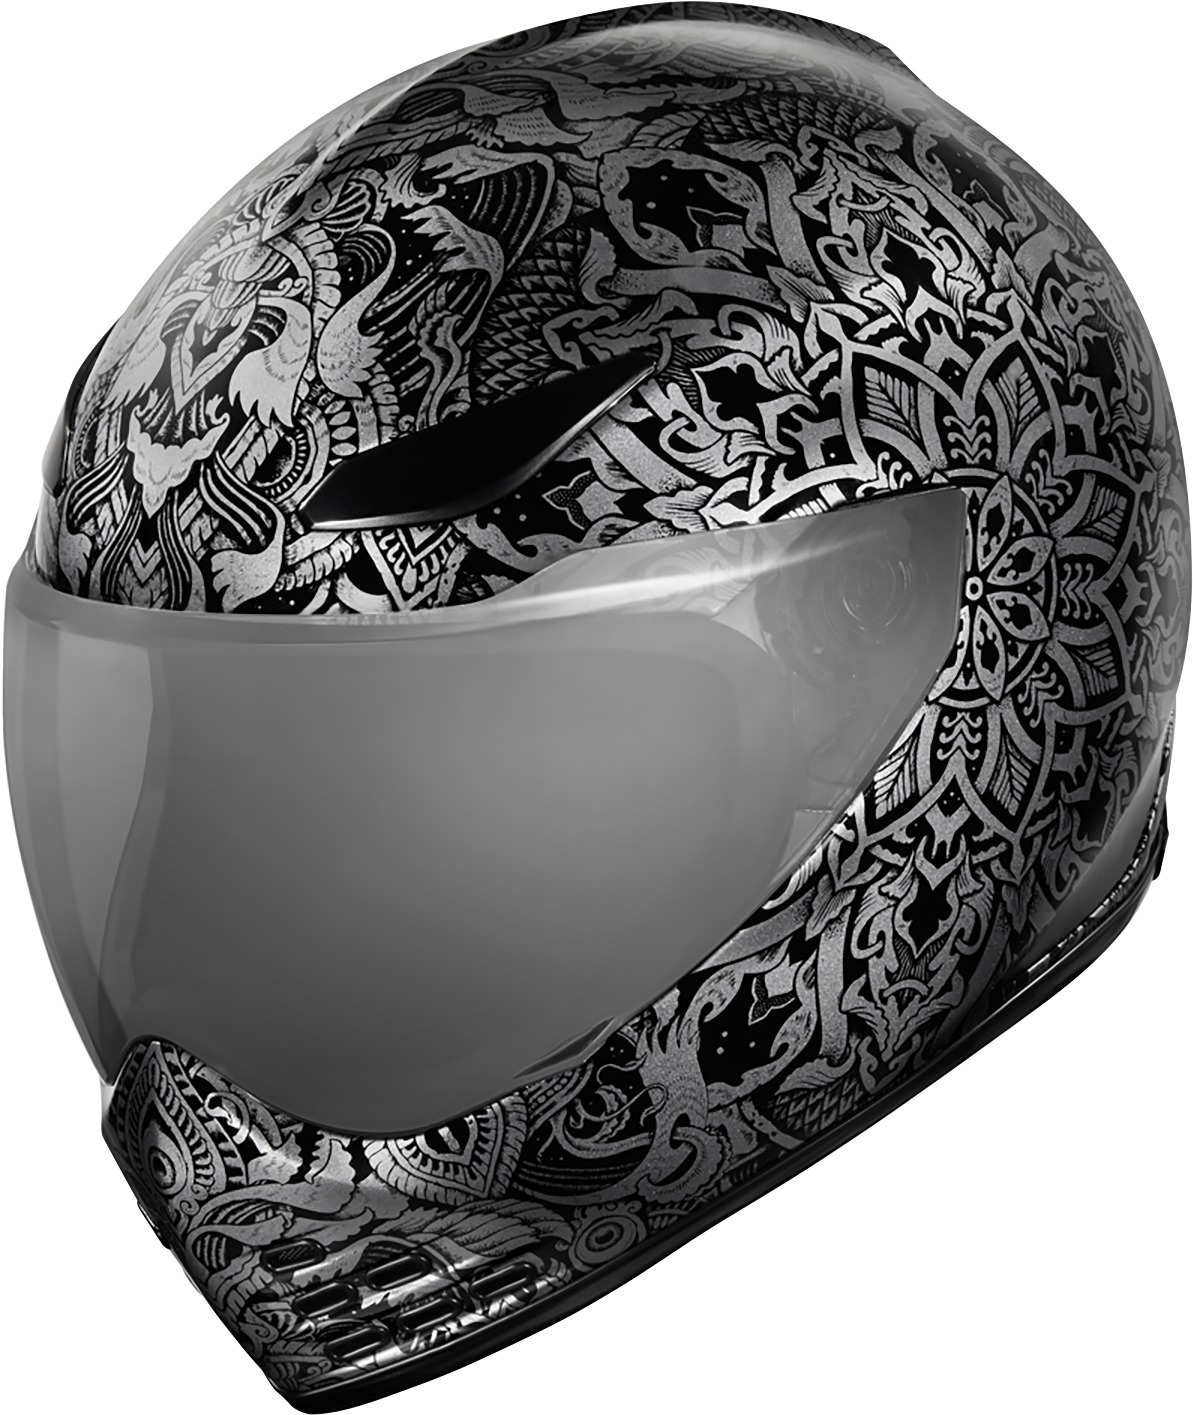 Domain Gravitas Helmet Black Small - Click Image to Close